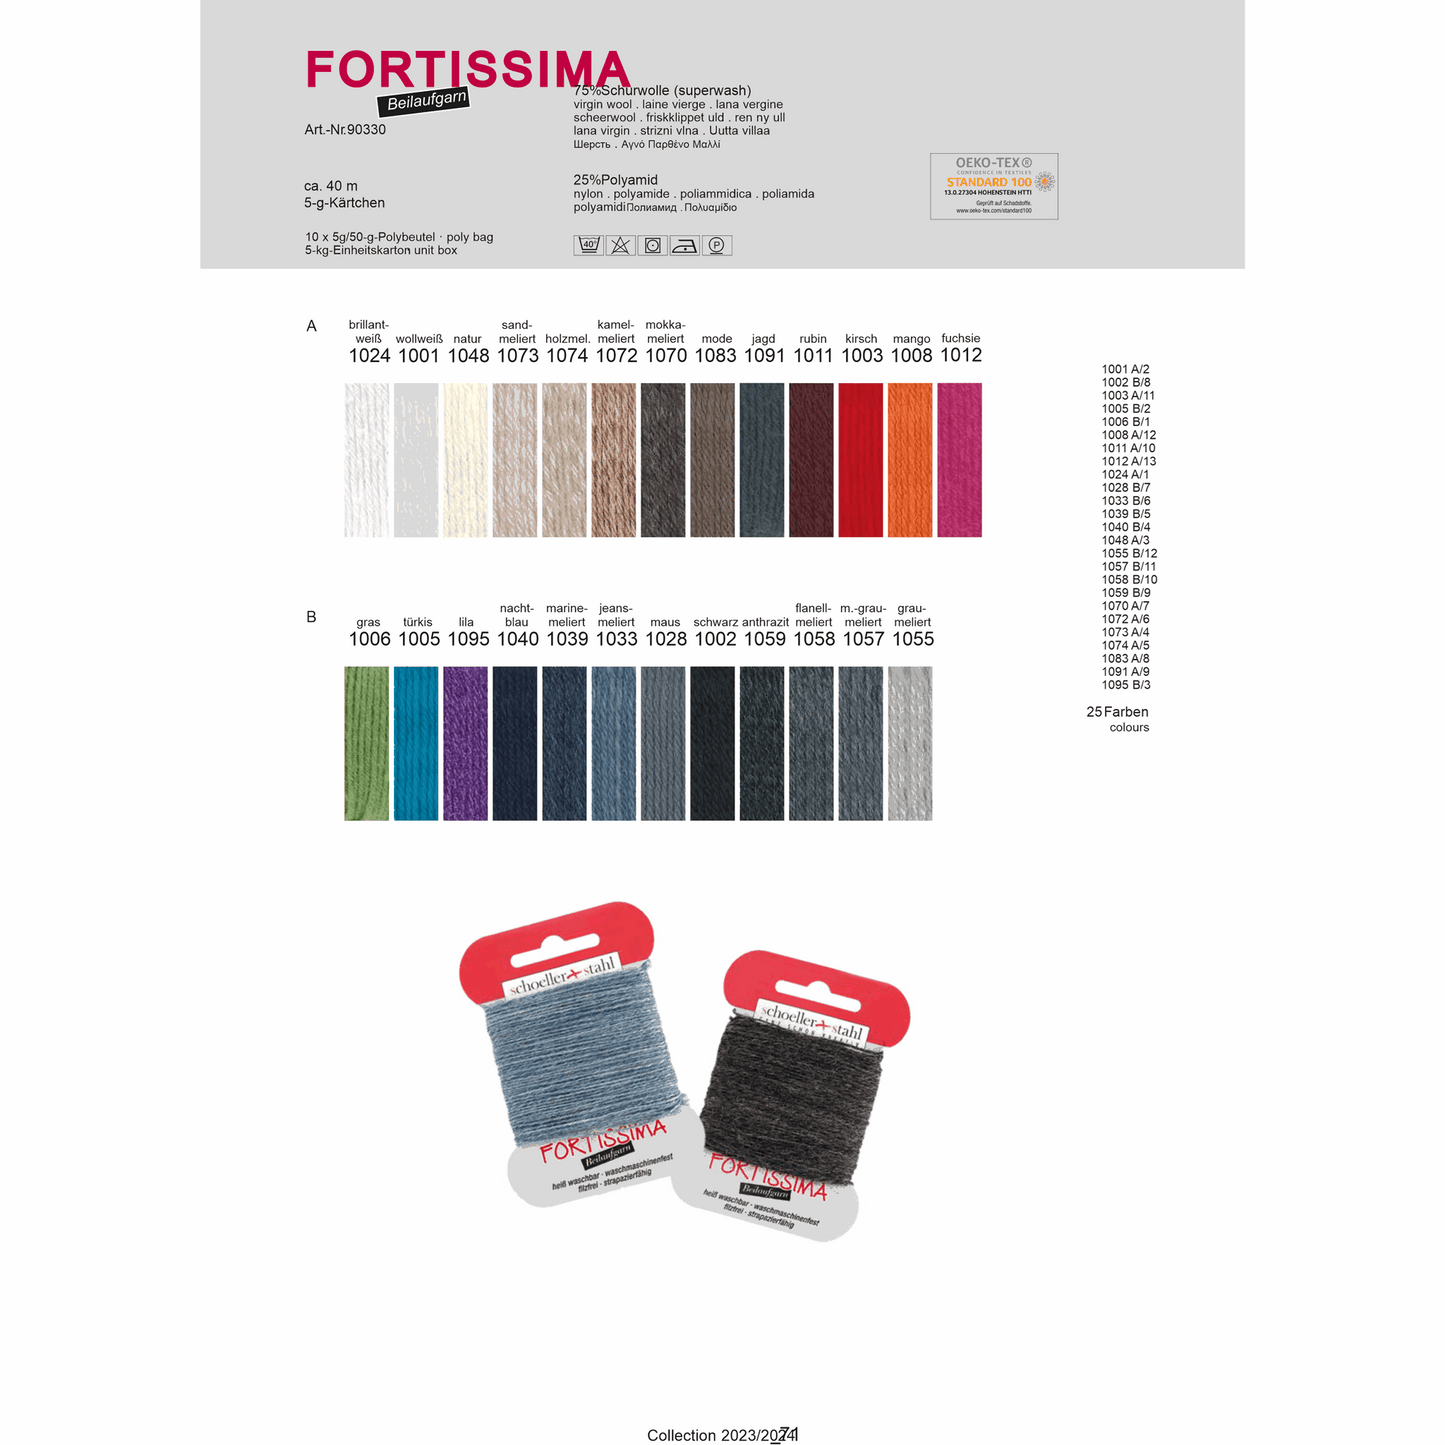 Fortissima thread 5g, 90330, color 1070, mocha mottled